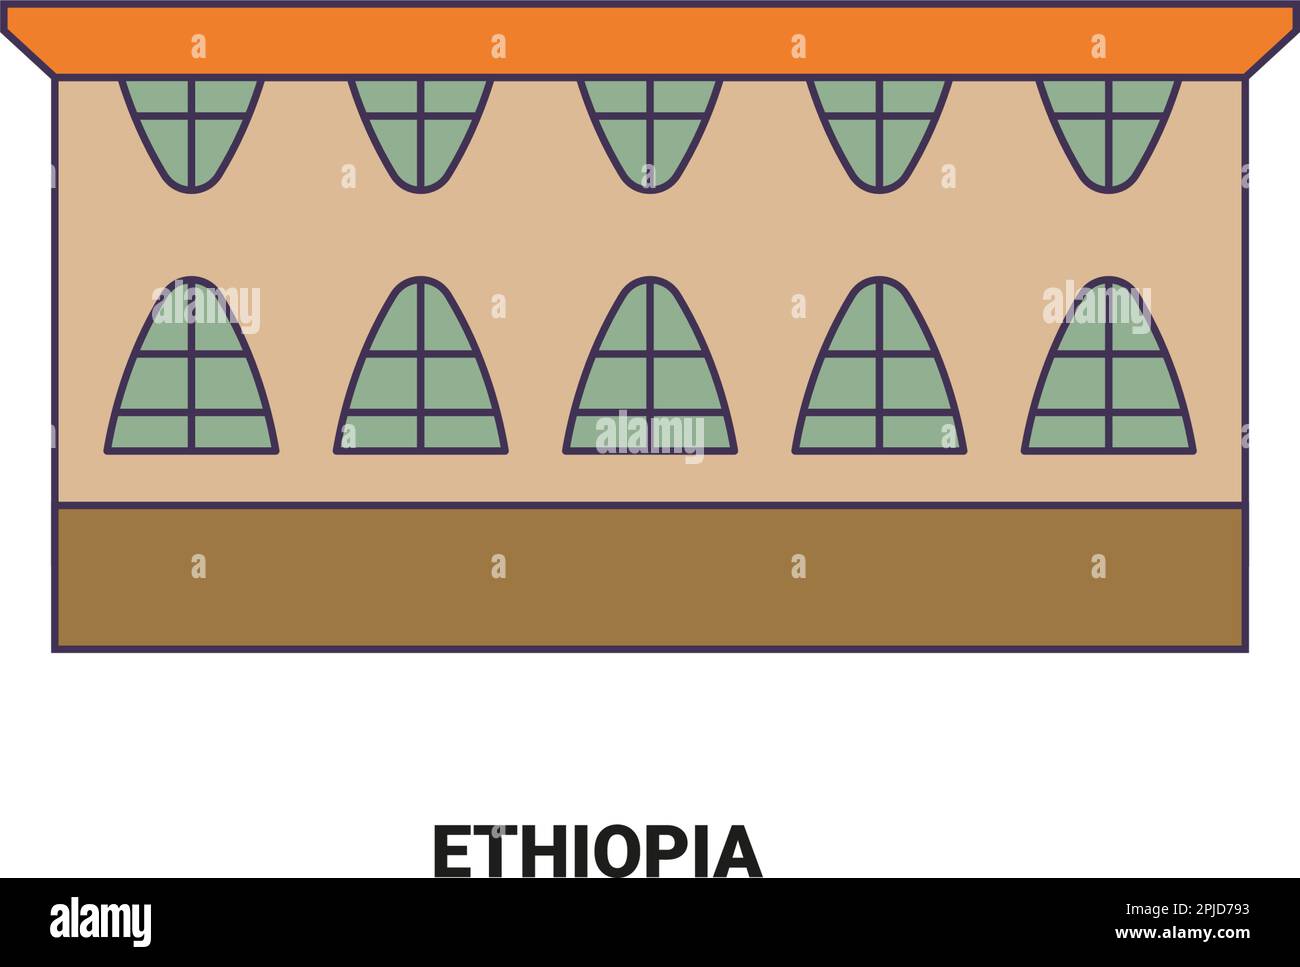 Ethiopia travel landmark vector illustration Stock Vector